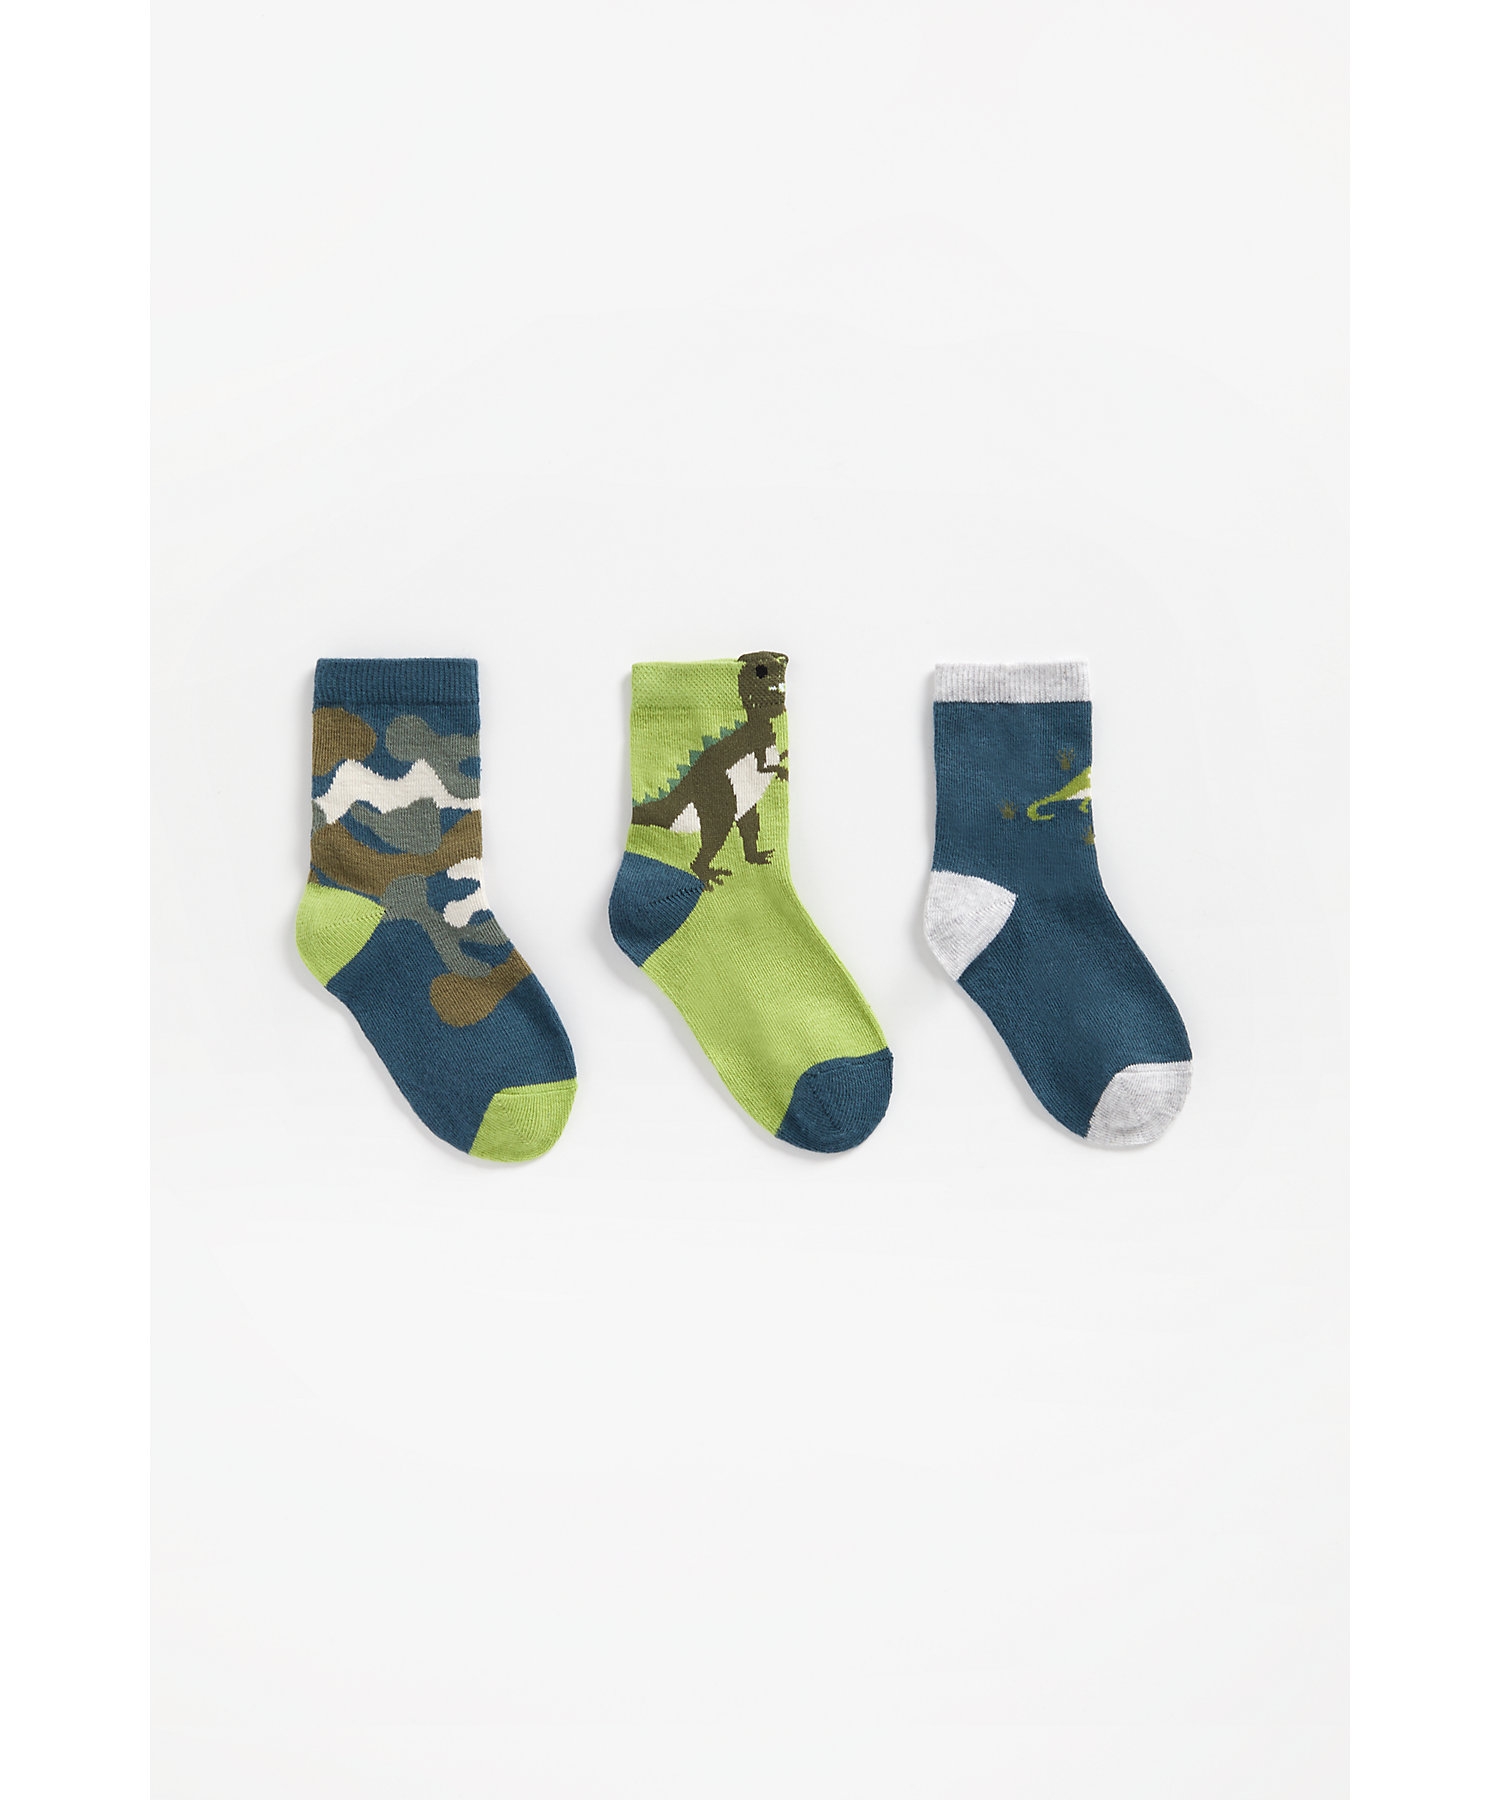 Boys Socks Dino And Camo Design - Pack Of 3 - Green